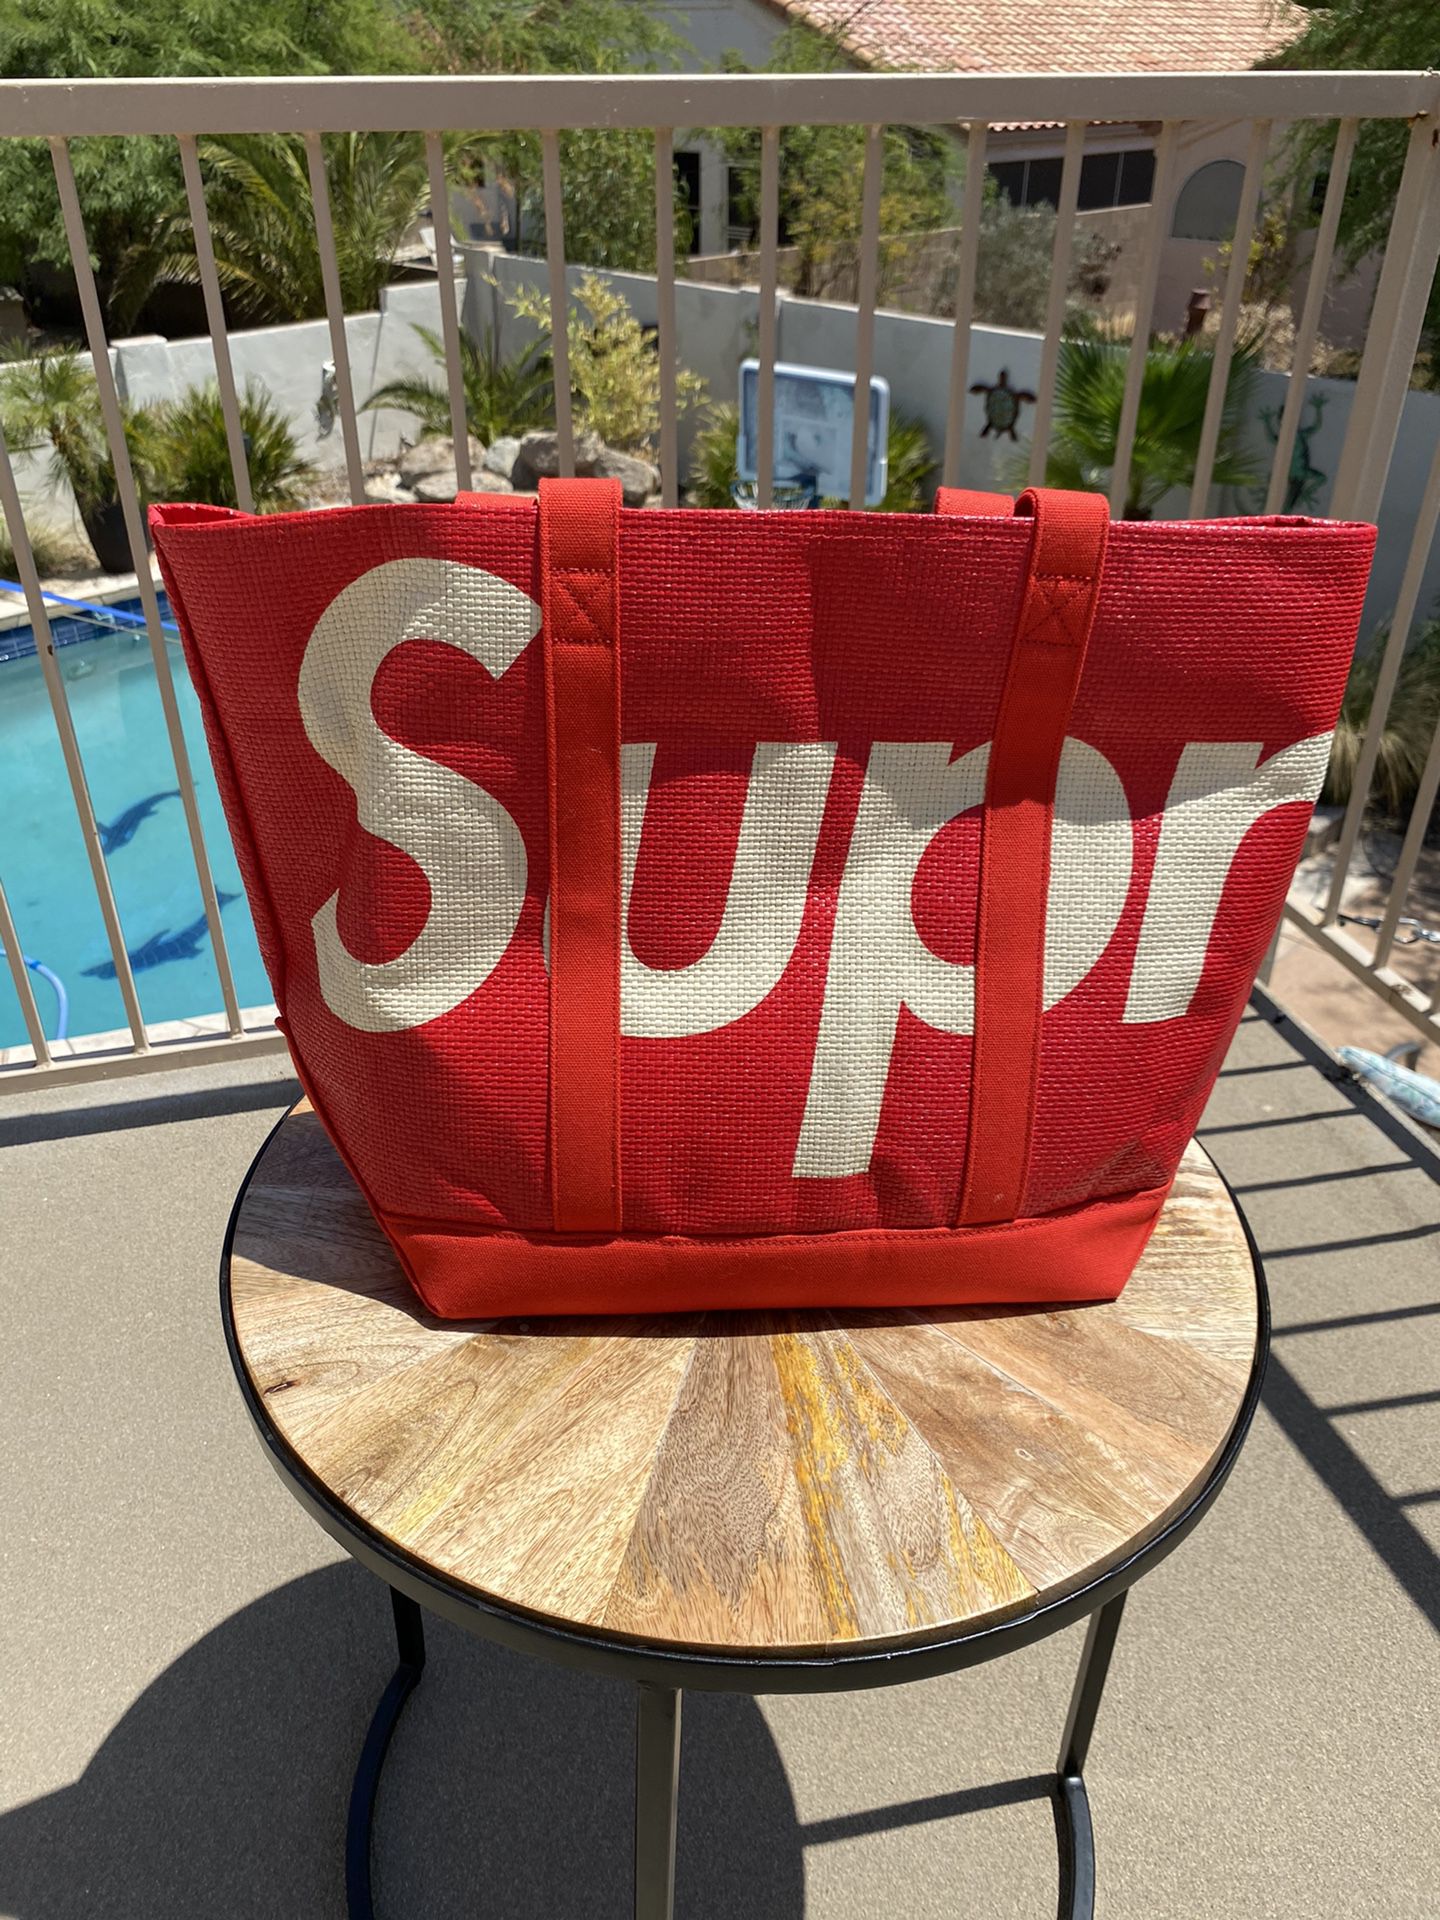 Supreme Raffia Tote Bag for Sale in Goodyear, AZ - OfferUp